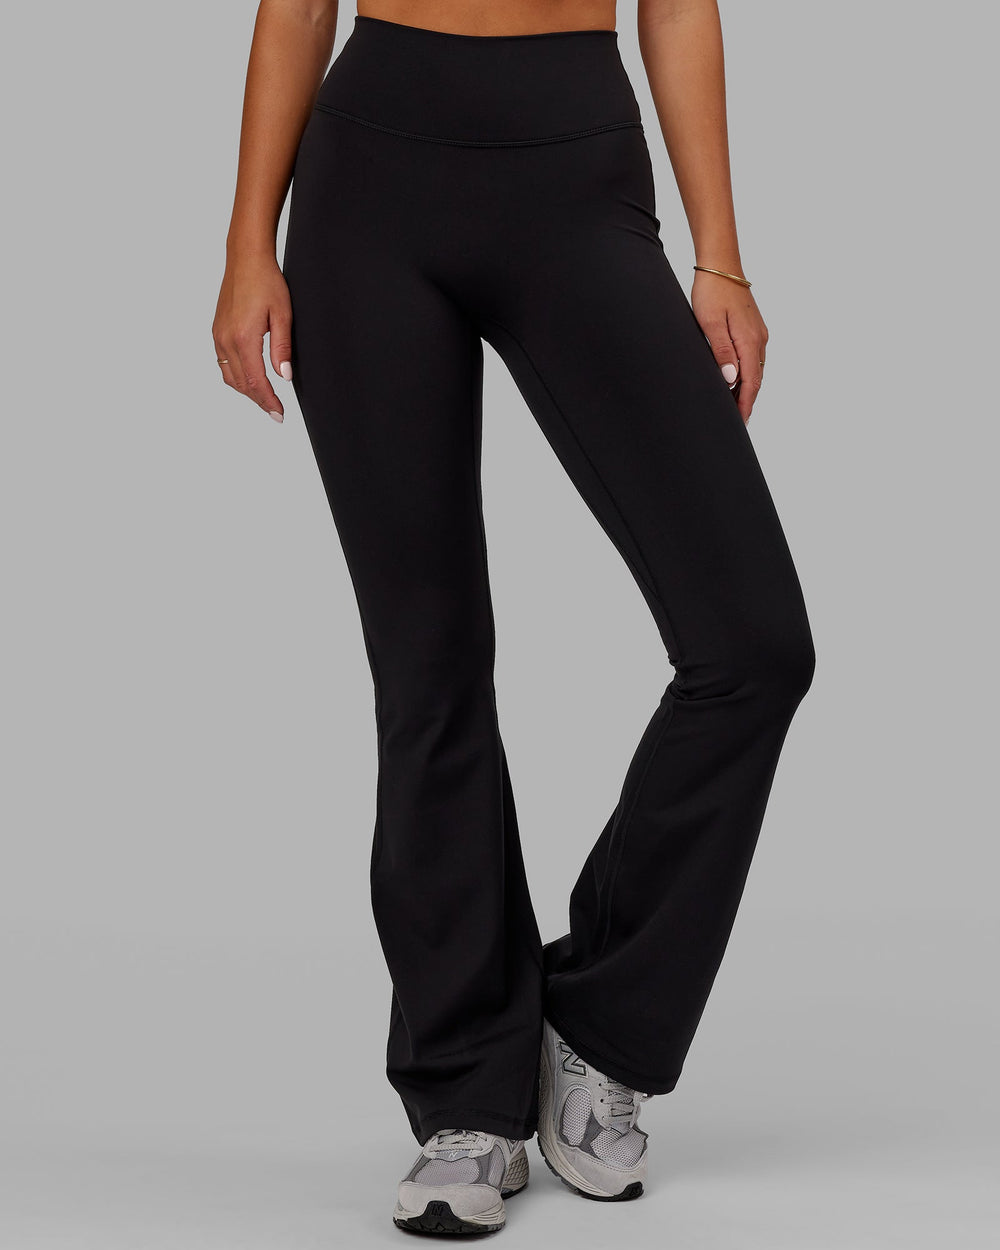 Dex 2222240D pants, comfortable black leggings and flared legs